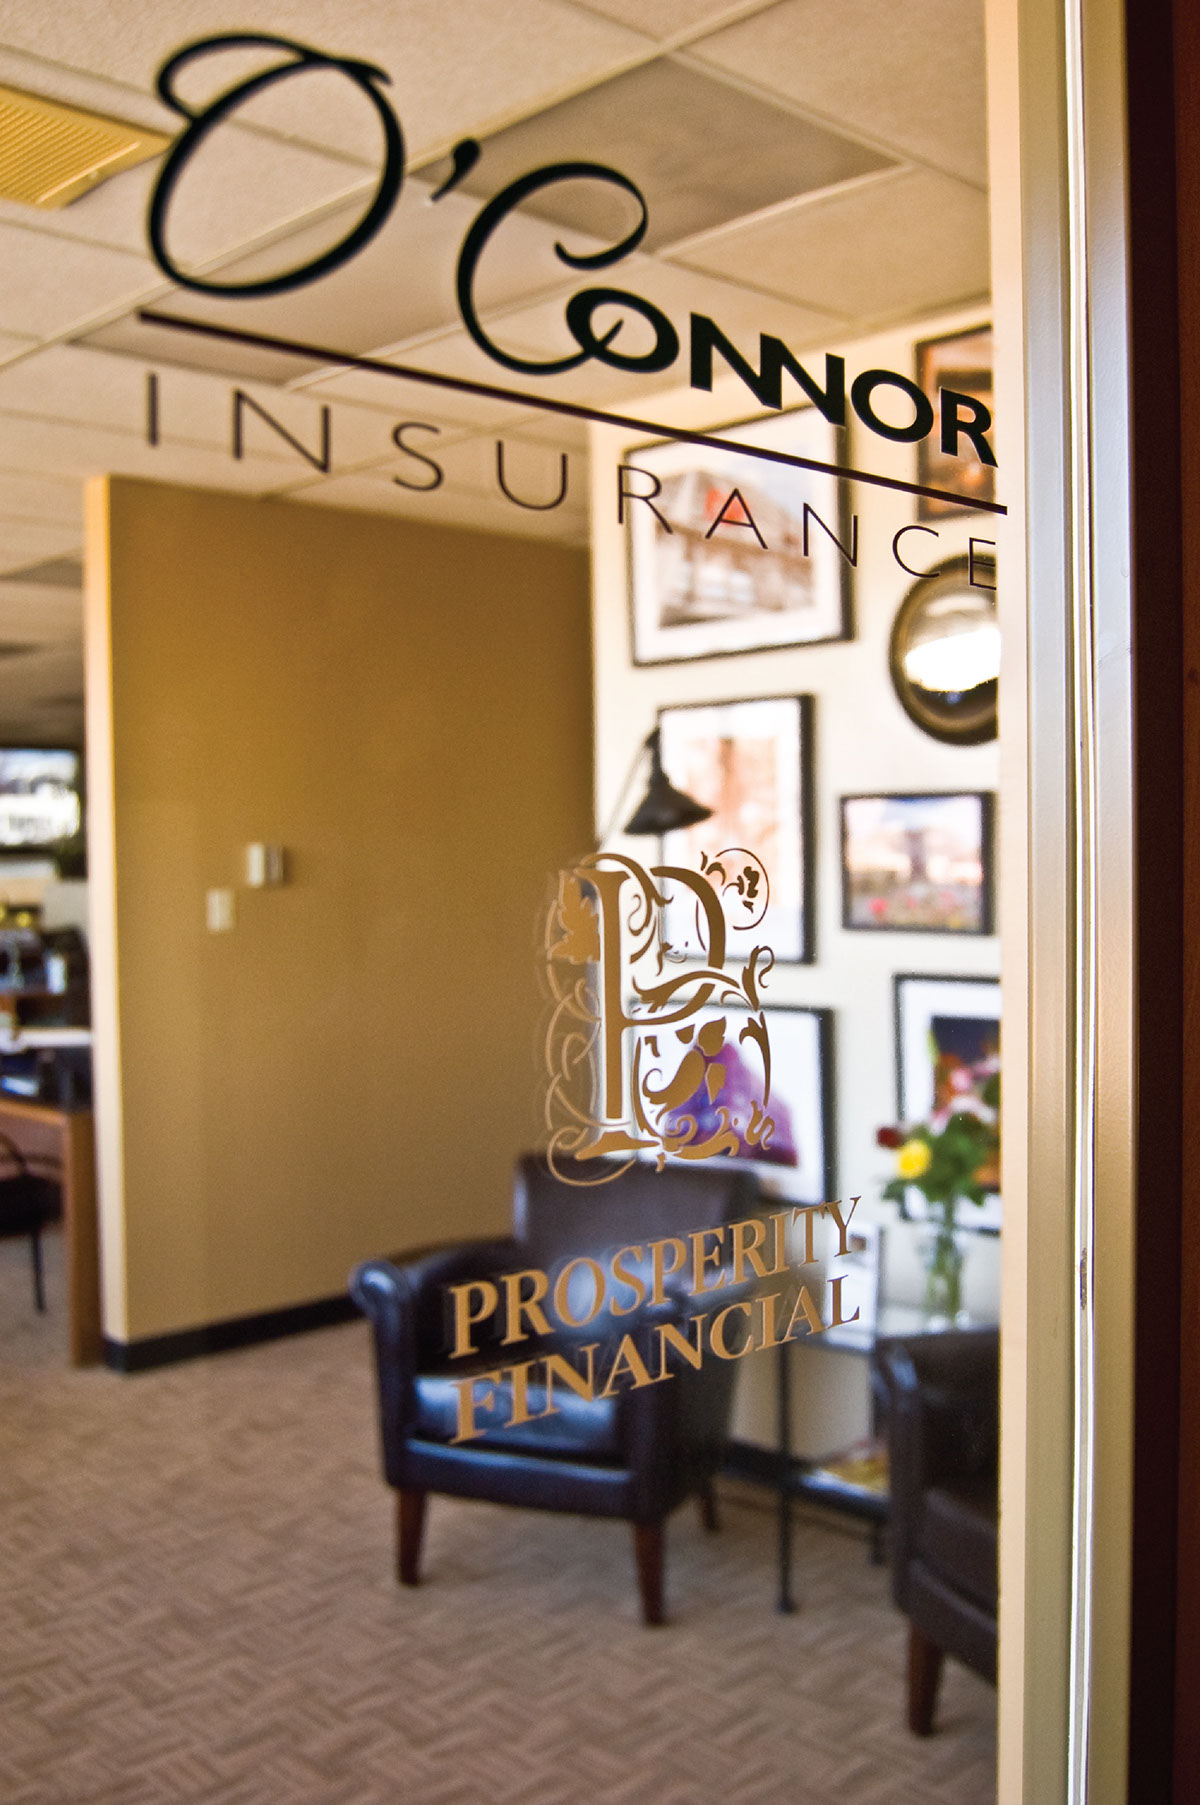 O'Connor Insurance Agency interiors design photos brand